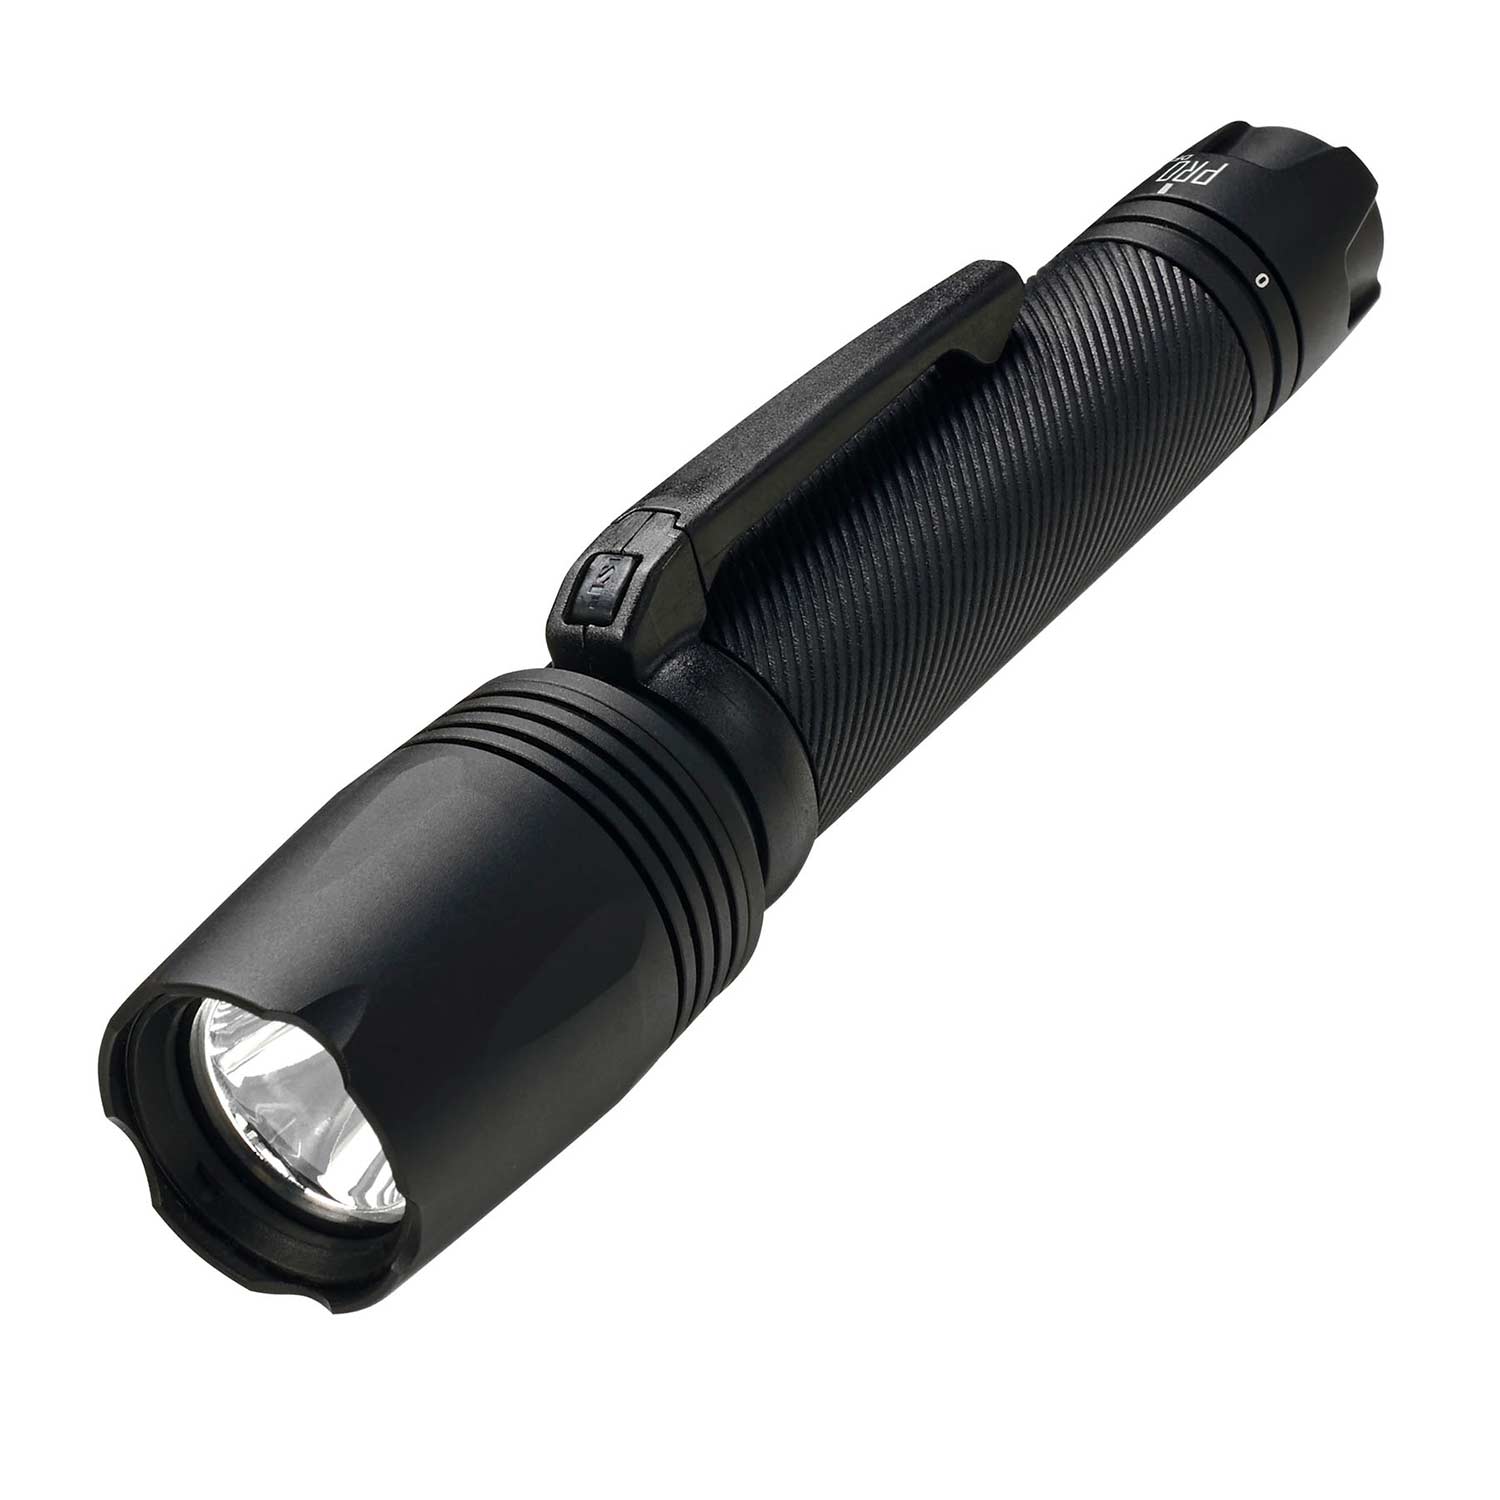 ASP Pro DF (Dual Fuel) Flashlight